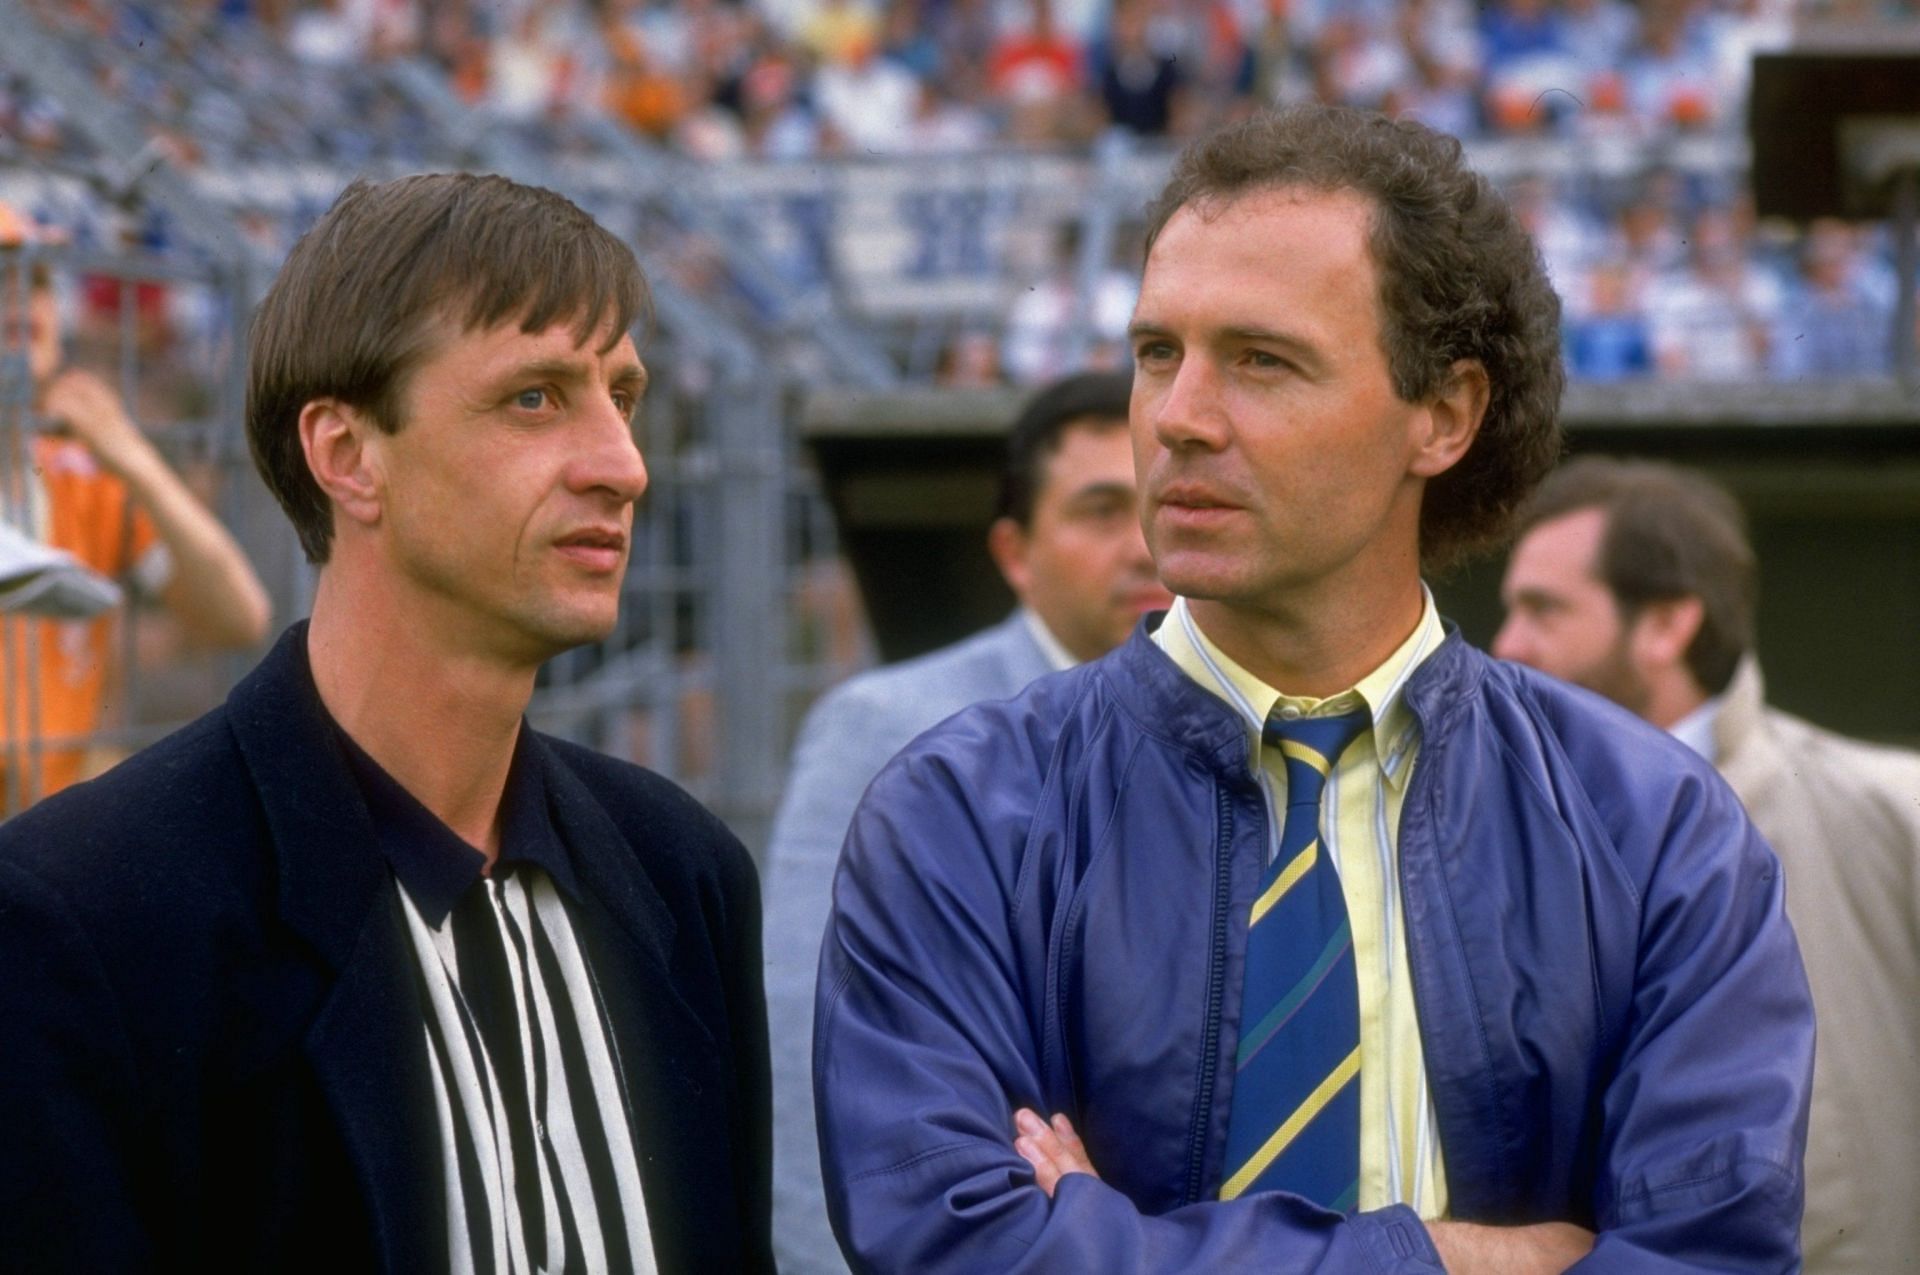 Johan Cruyff of Holland and Franz Beckenbauer of Germany